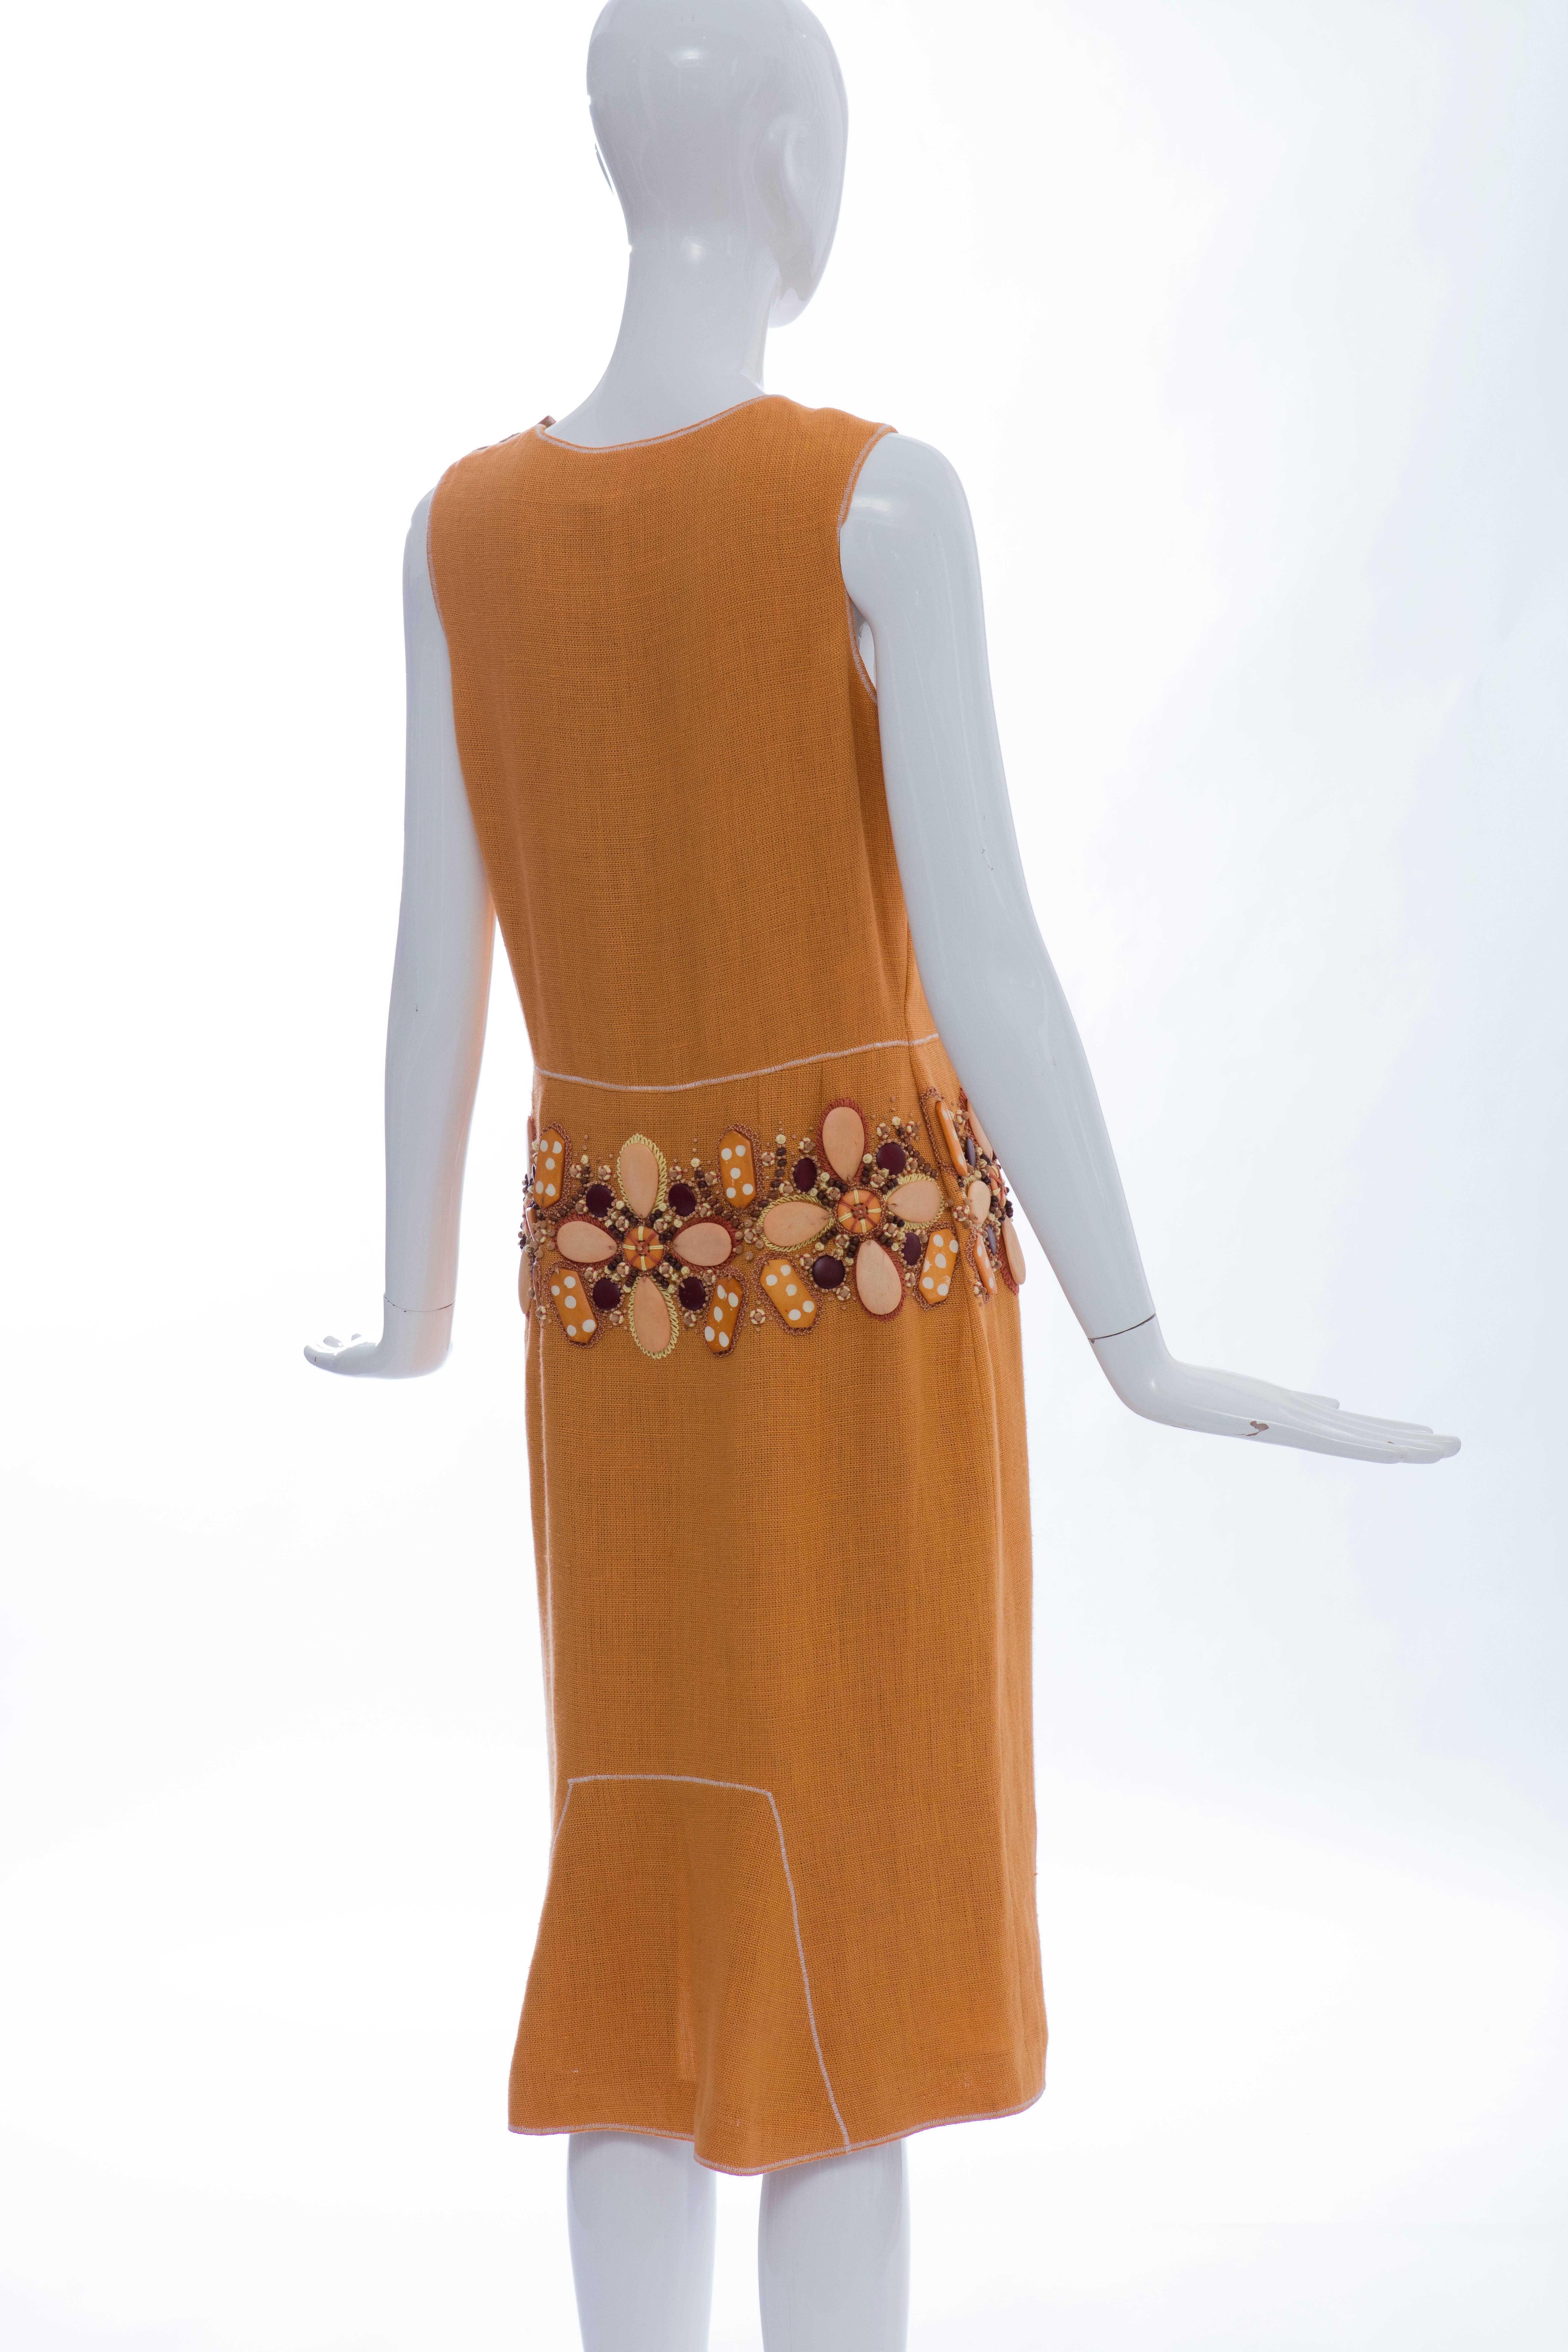 Oscar De la Renta Runway Sleeveless Embroidered Linen Dress, Spring 2006 For Sale 2